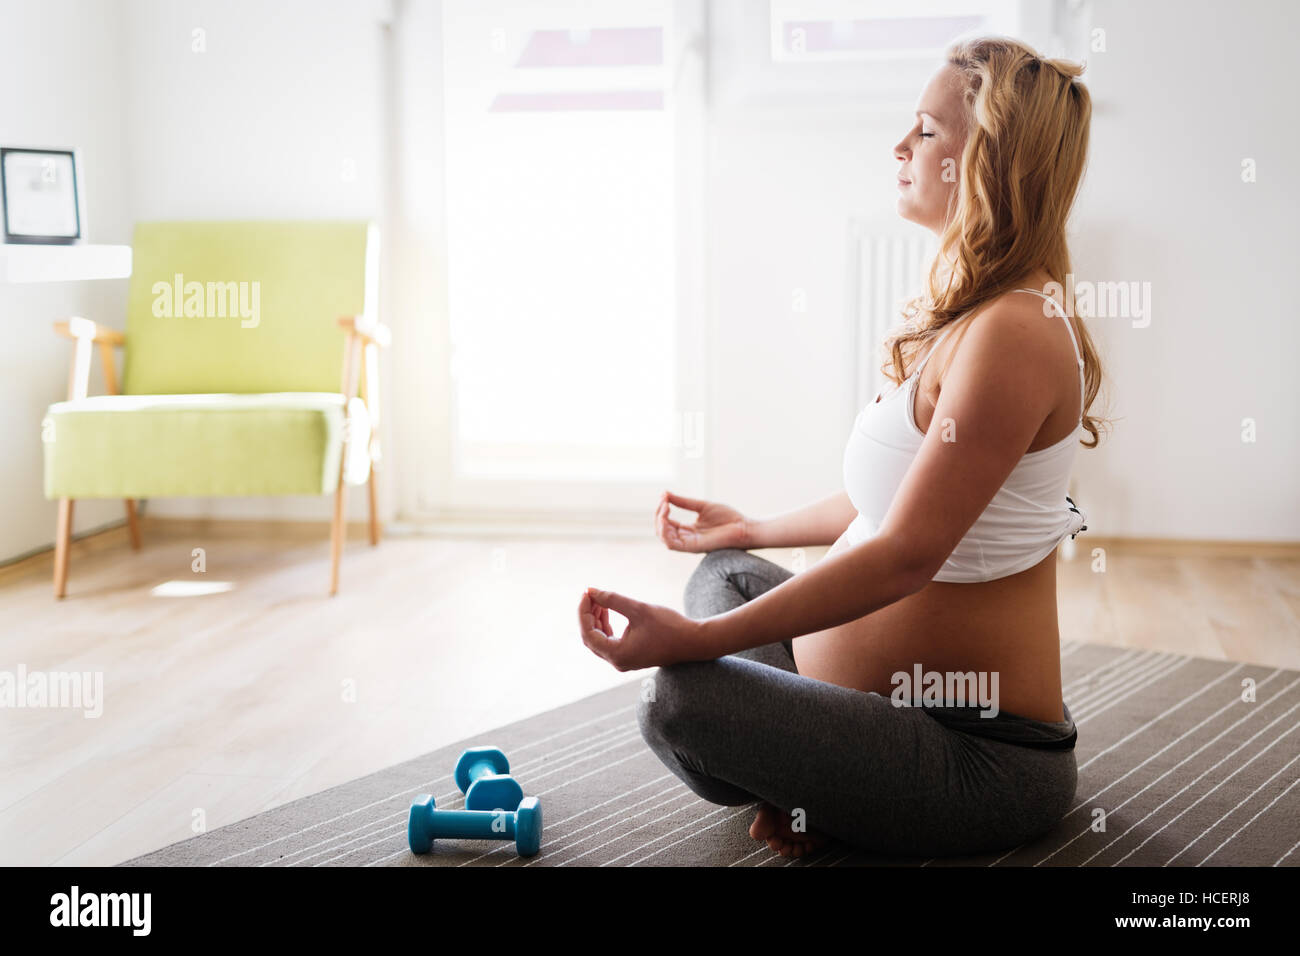 Pregnant woman in lotus posture practicing yoga Stock Photo